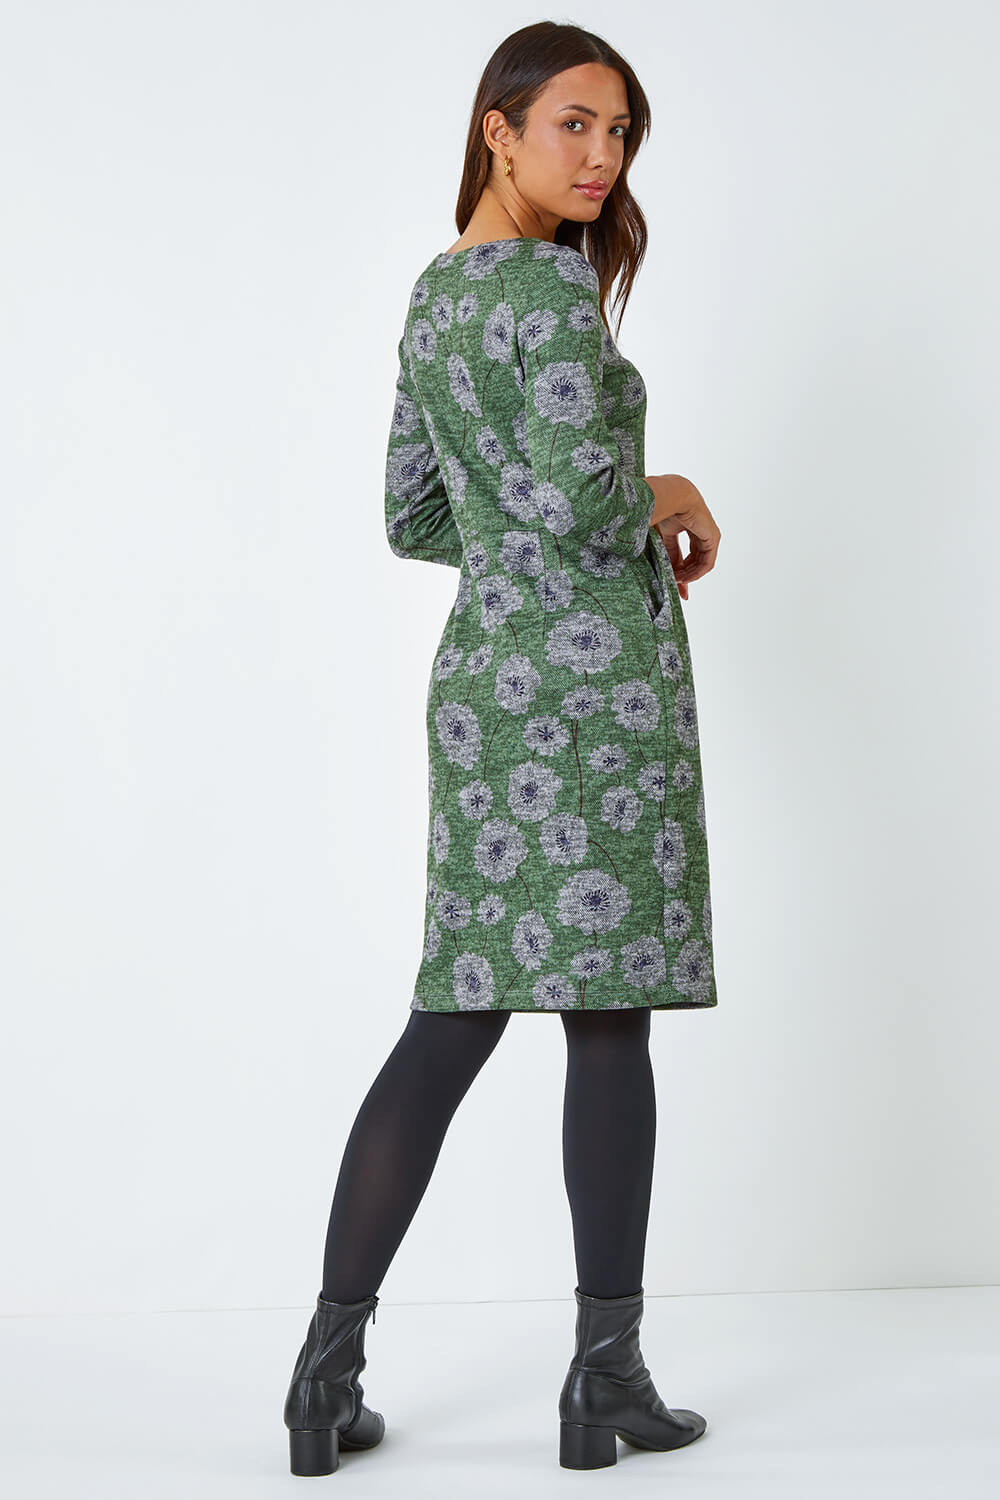 Green Floral Print Pocket Stretch Dress, Image 3 of 5